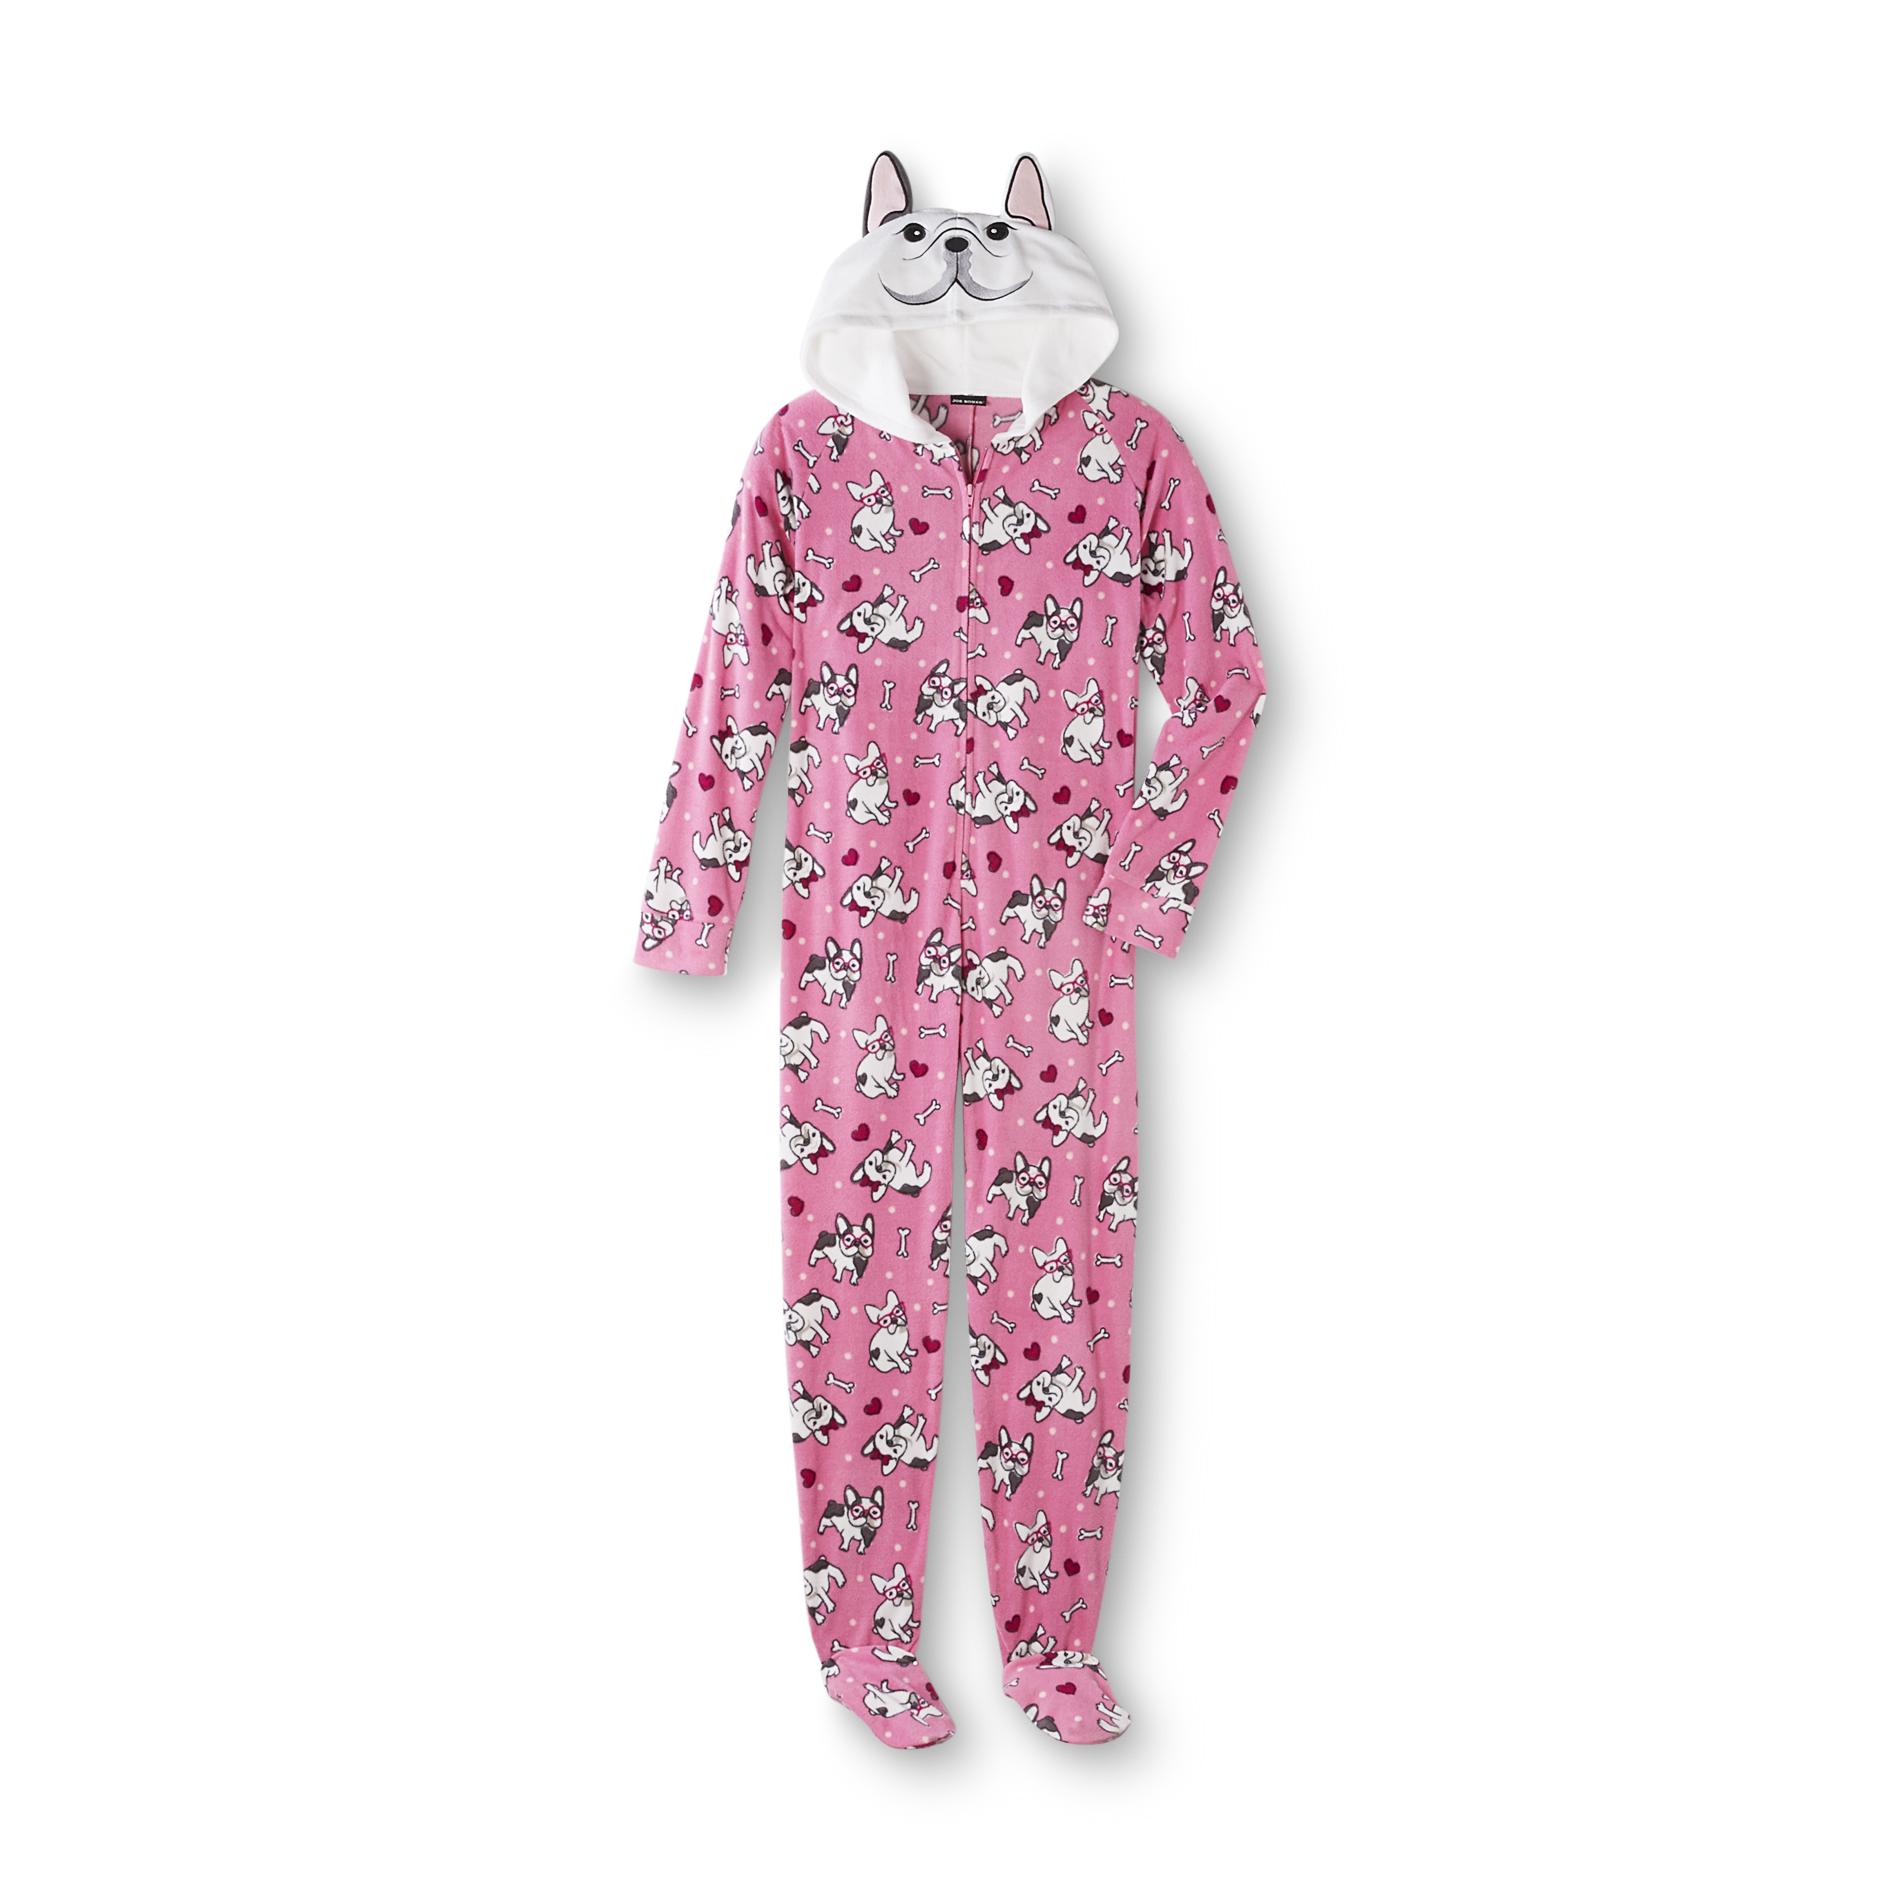 Joe Boxer Women's Footed Sleeper Pajamas - Dog